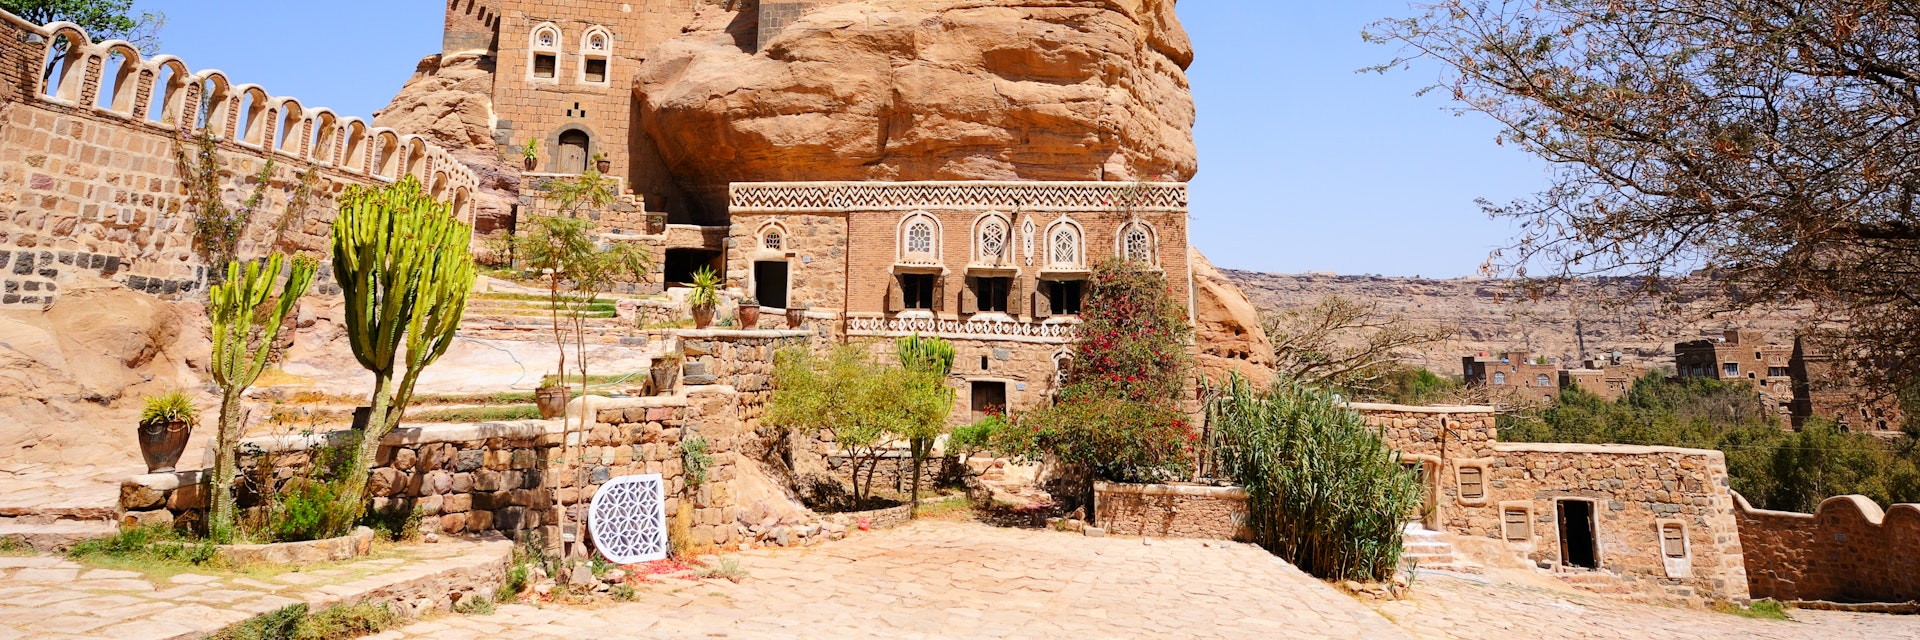 Dar Al-Hajar - house of imam in Wadi Dahr valley near Sanaa, Yemen.